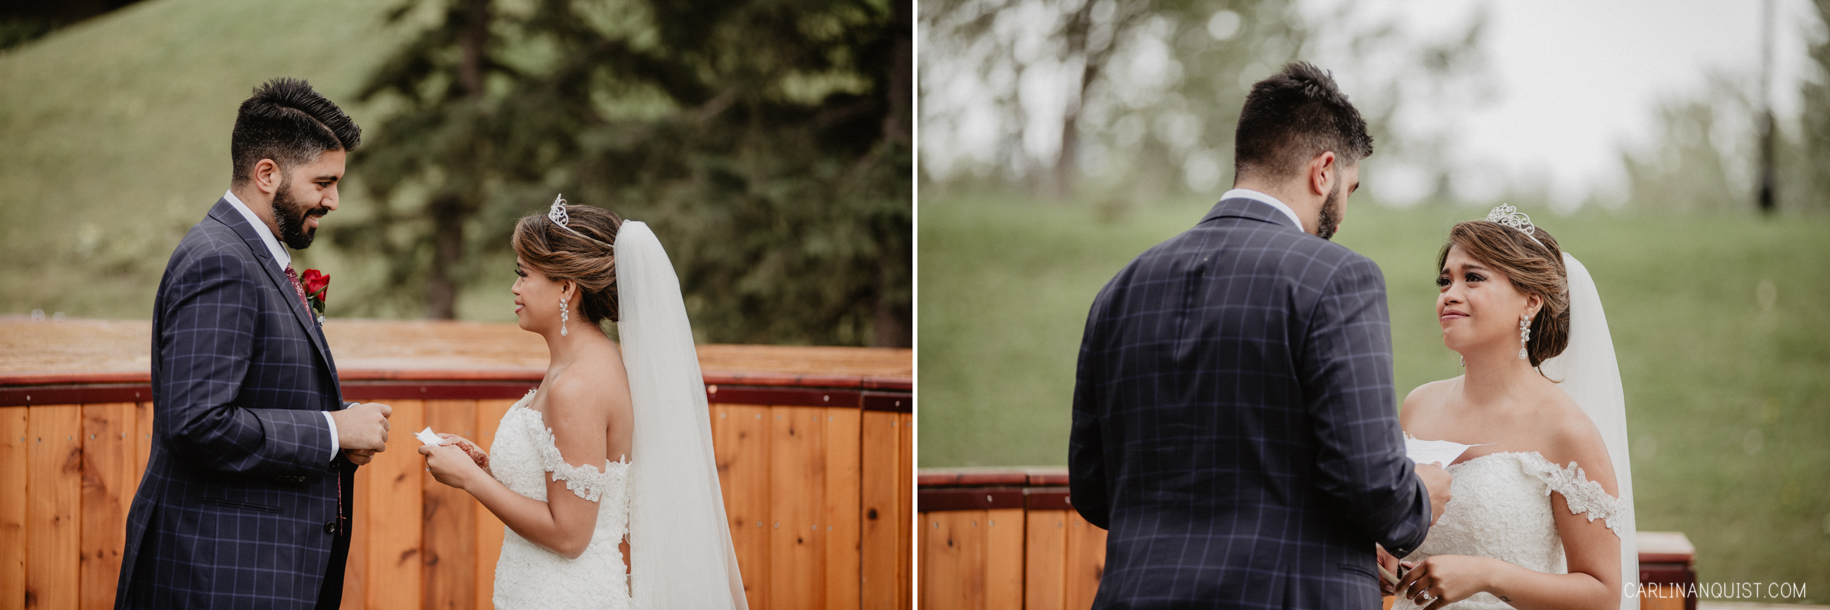 Exchanging Vows - Bride & Groom Portraits - Catholic/Sikh Wedding Photographer Calgary